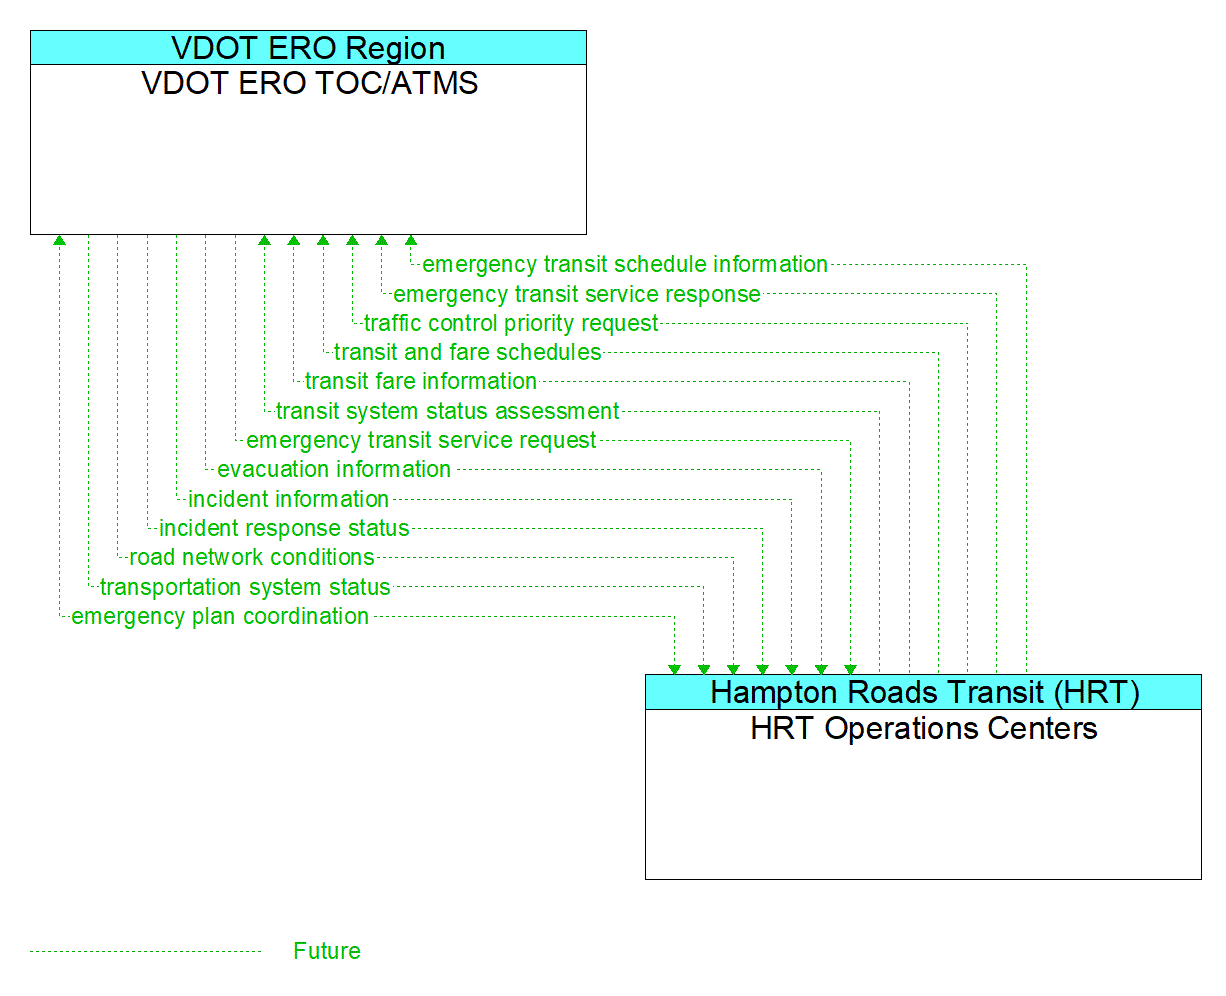 Architecture Flow Diagram: HRT Operations Centers <--> VDOT ERO TOC/ATMS